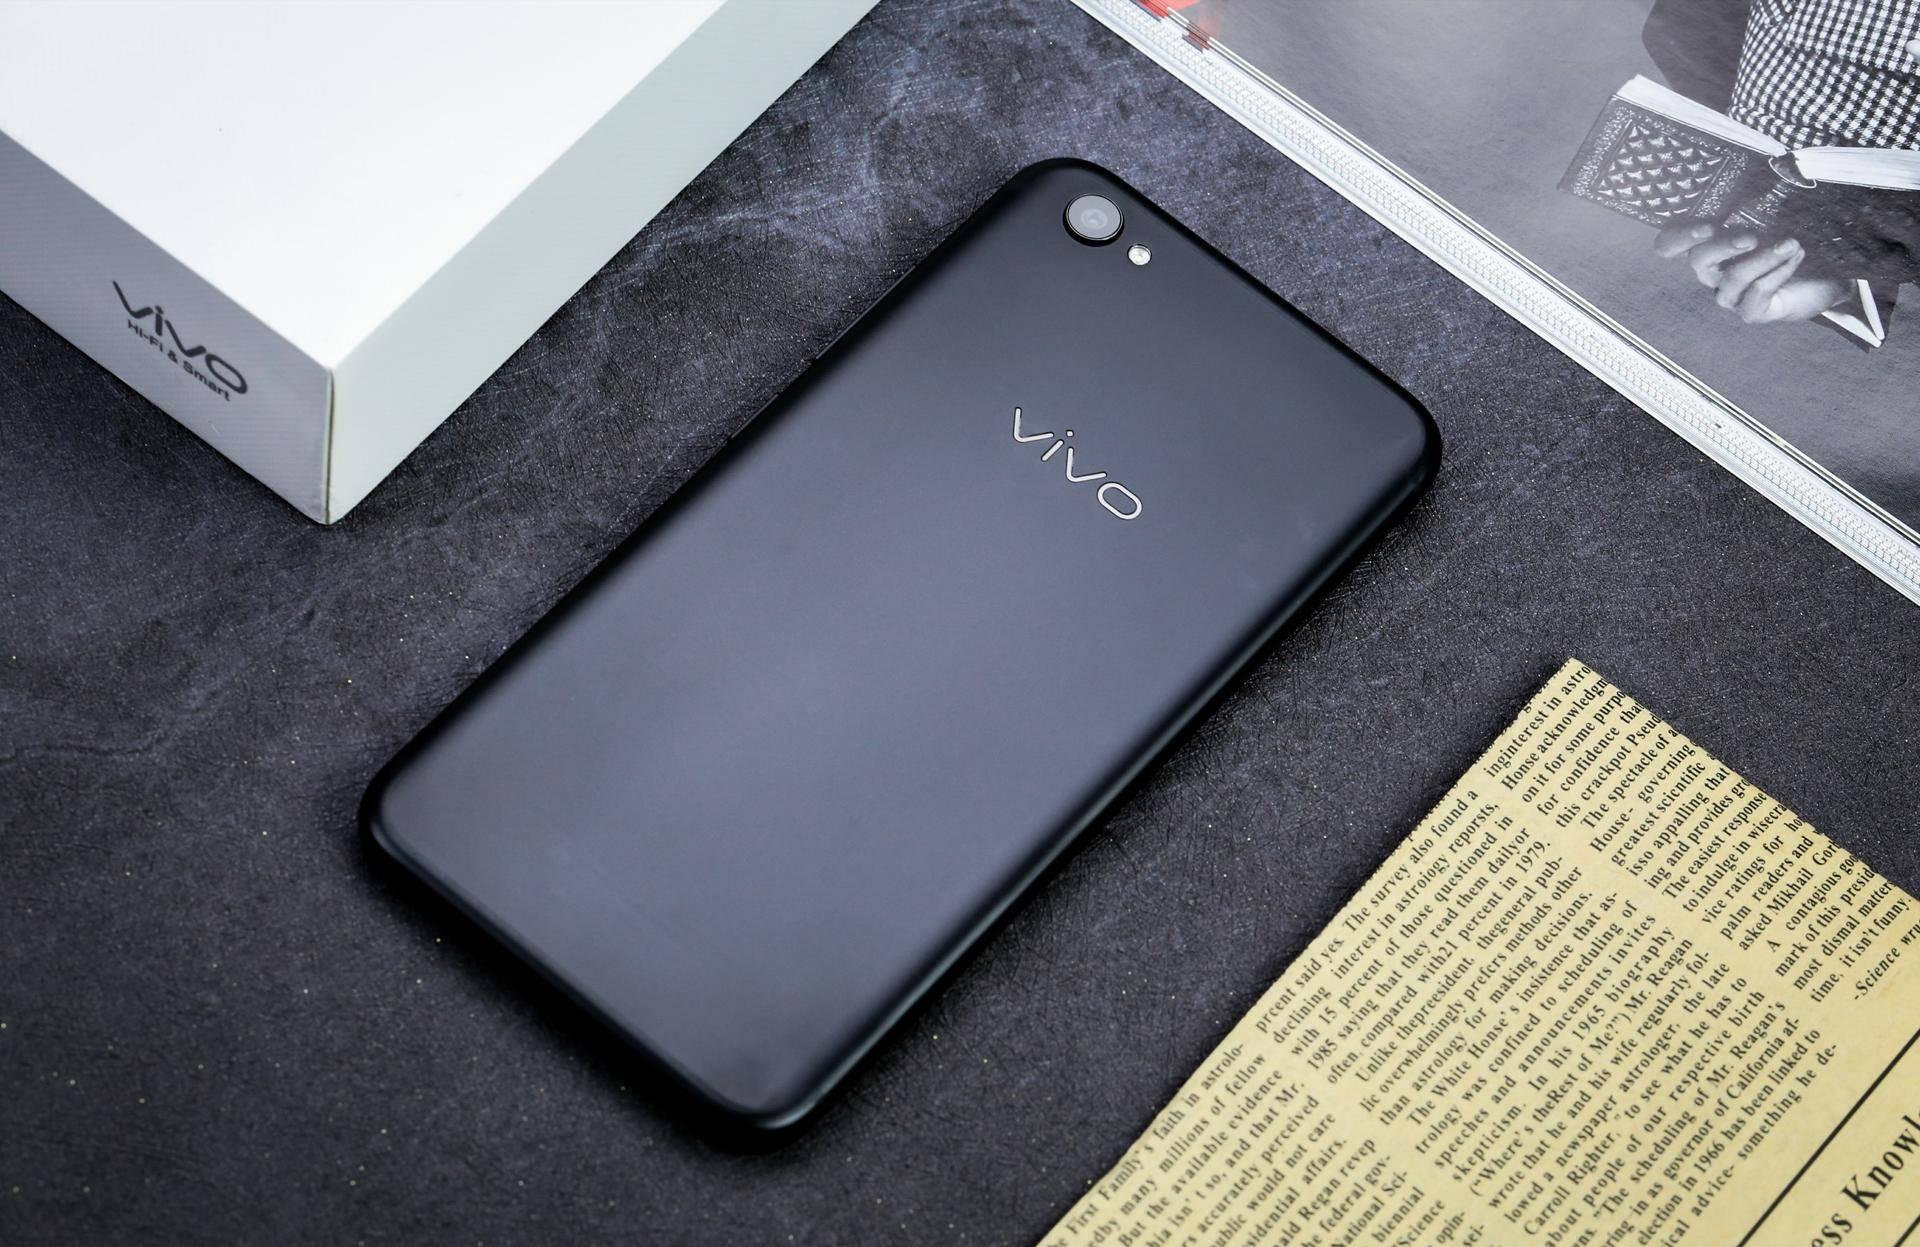 vivo X9手机参数和价格 手机vivox9多少钱一台